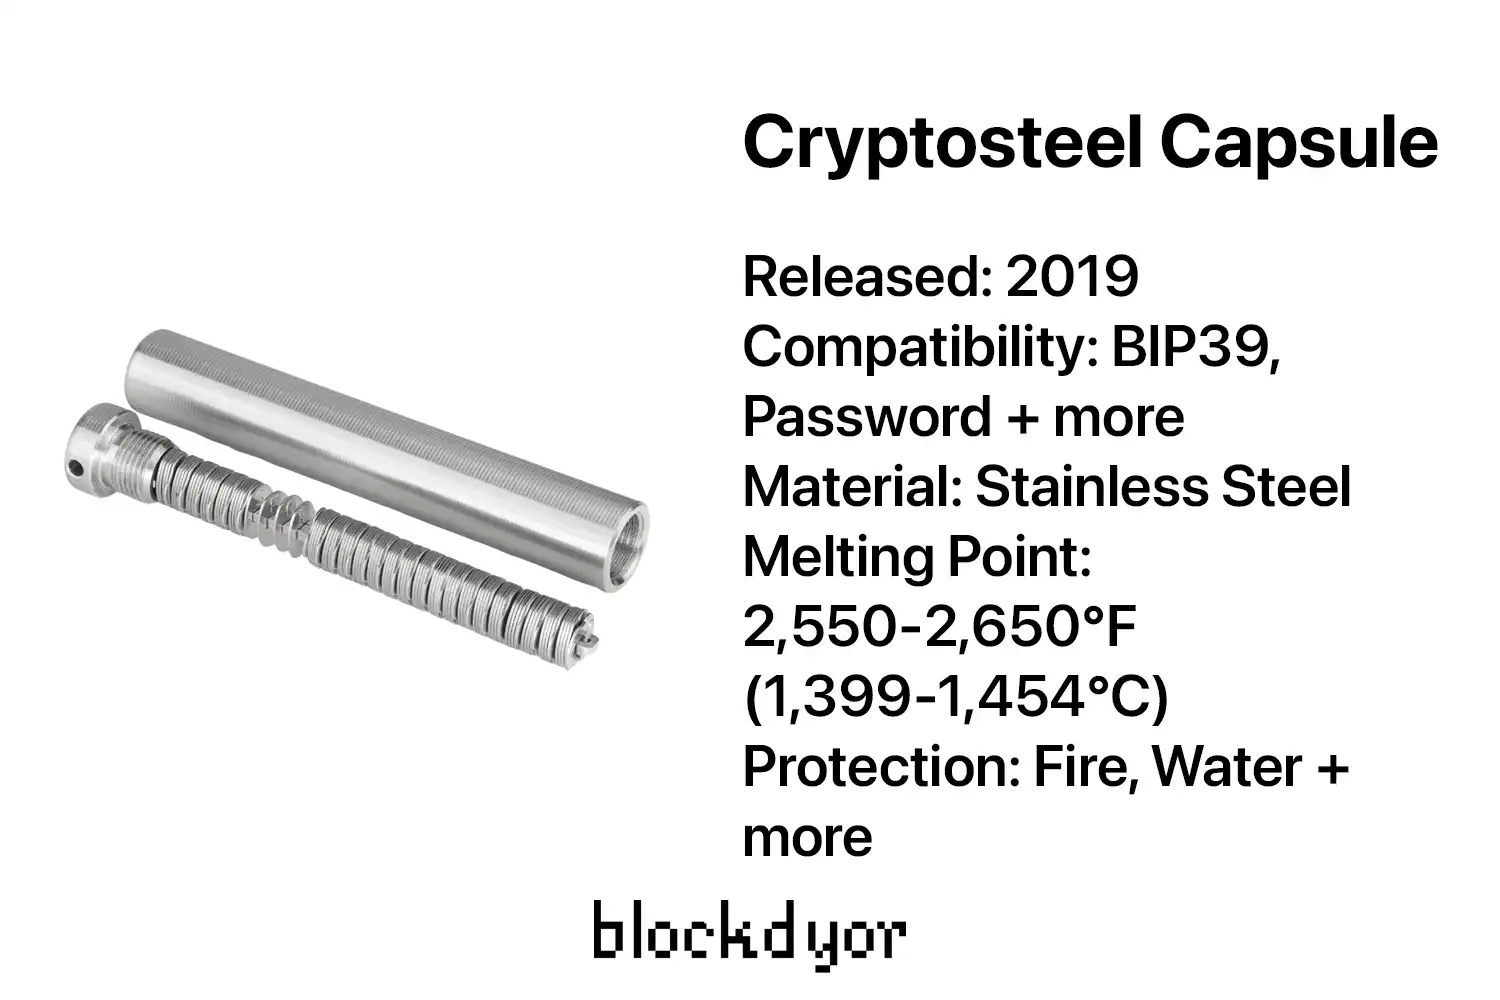 Cryptosteel Capsule Overview